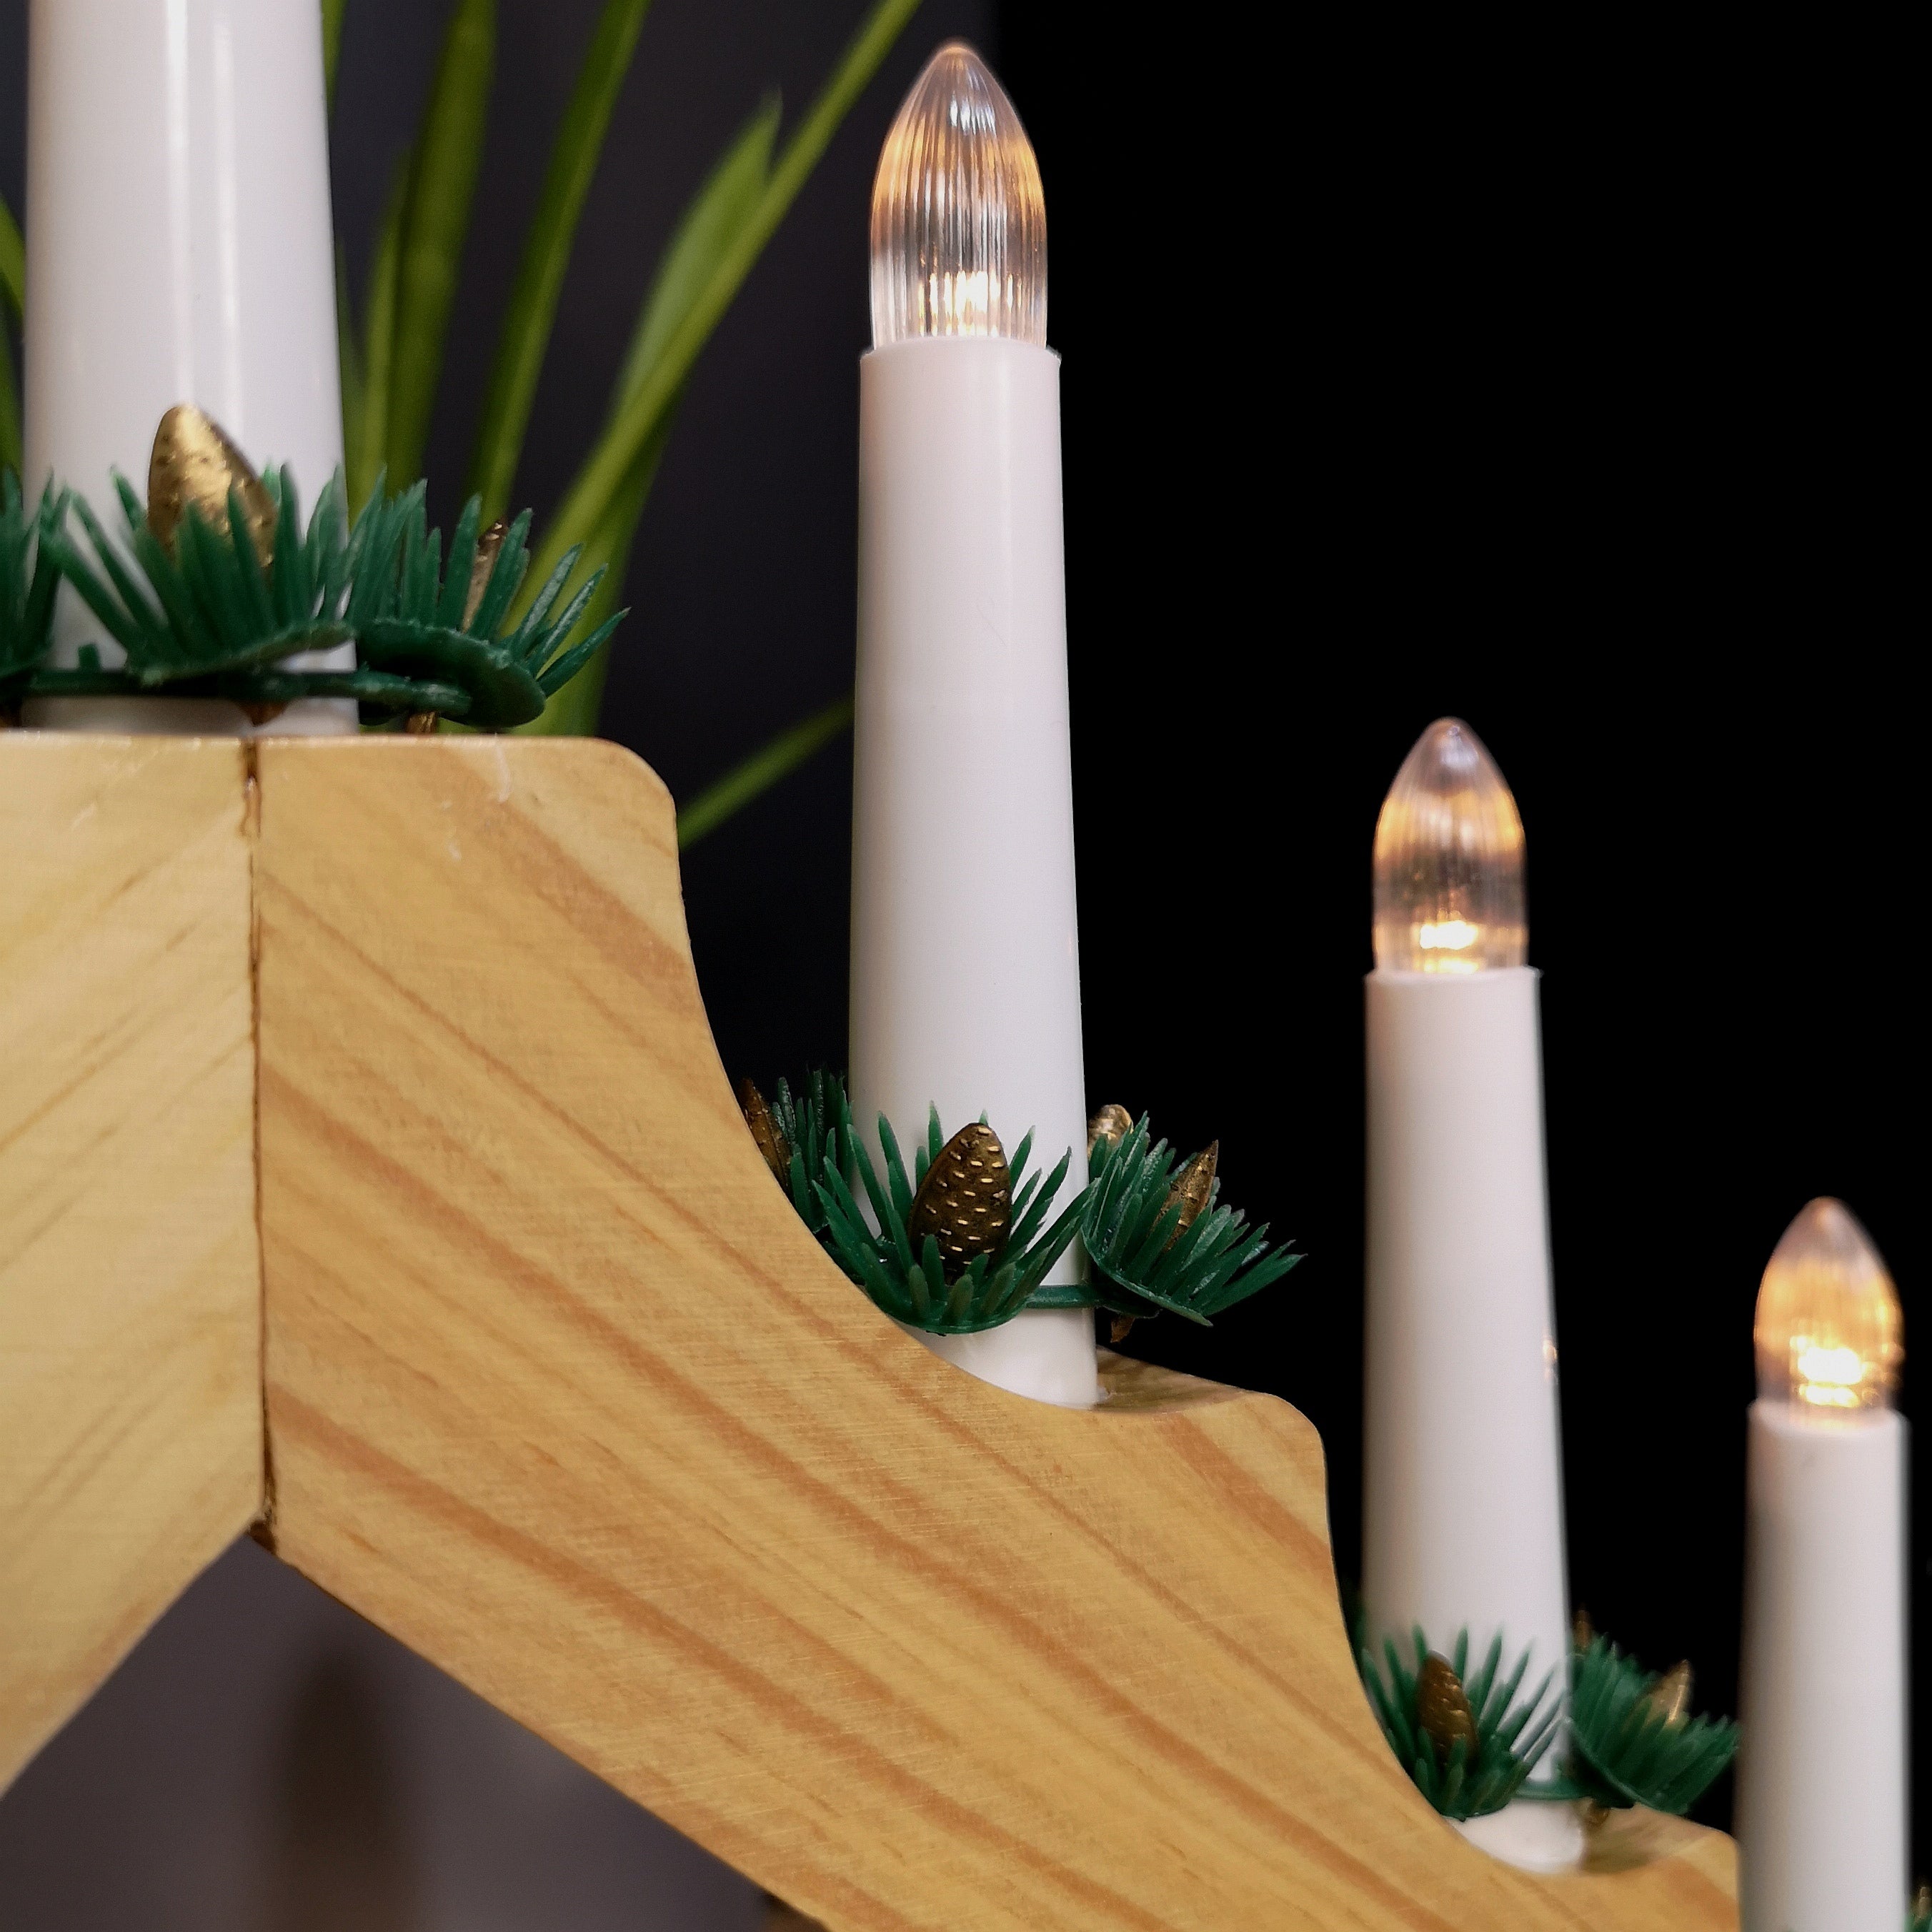 29cm Battery Operated 7 LED Wooden Candle Bridge Christmas Decoration